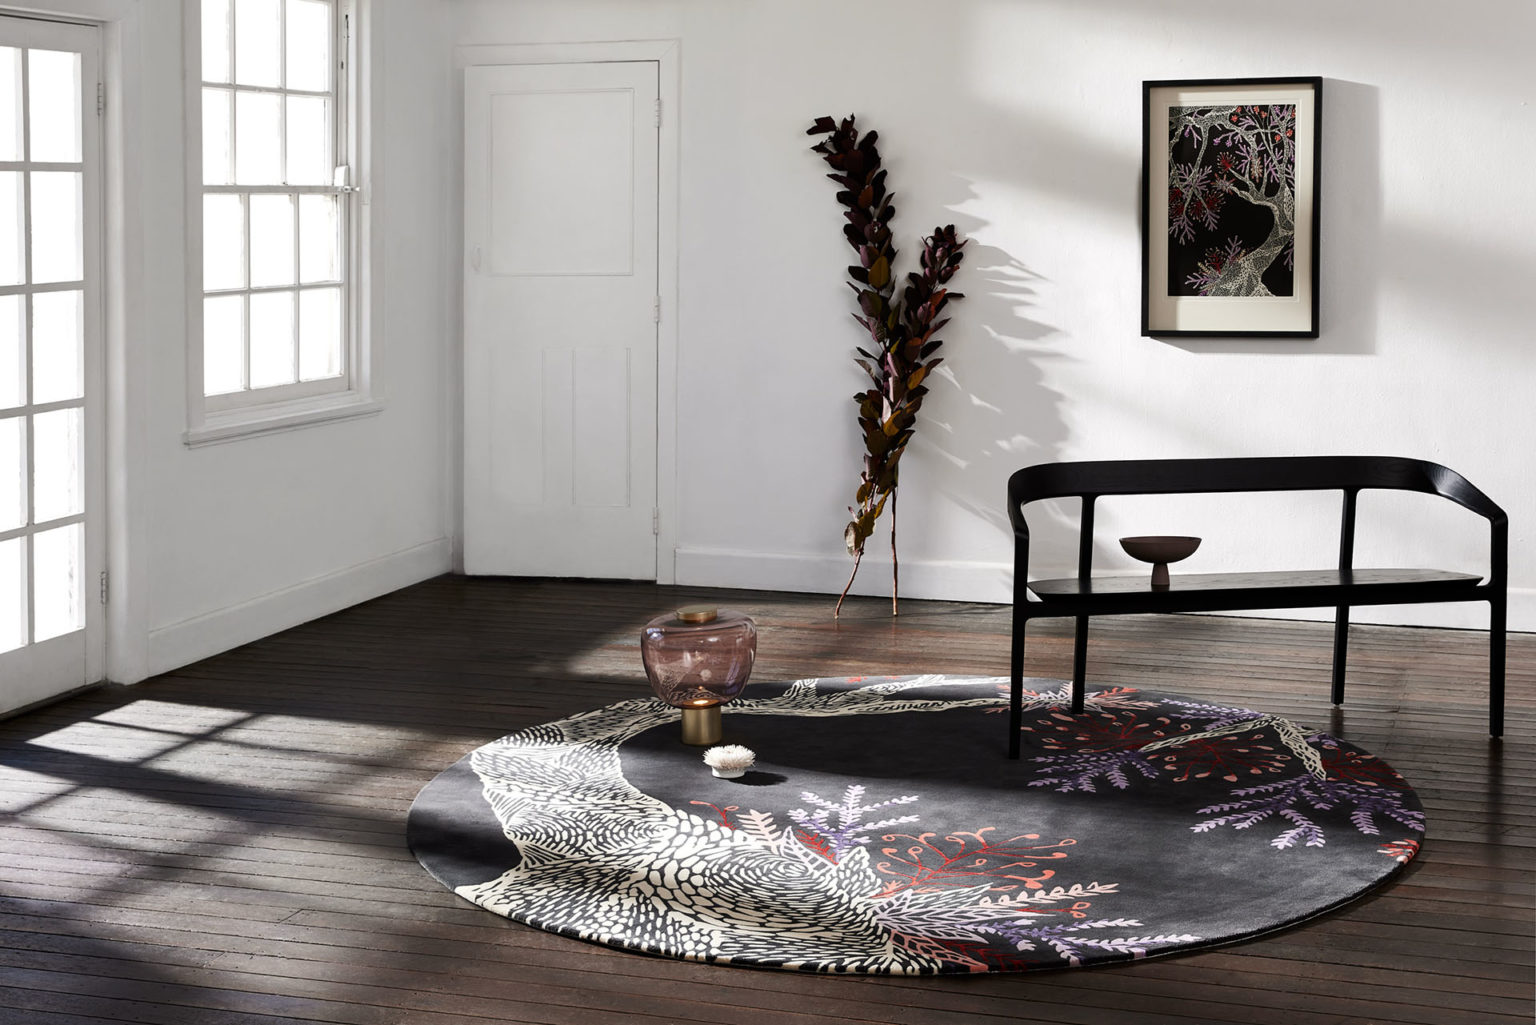 designer rugs tamika grant iramu changing seasons lo wr e1645595400774